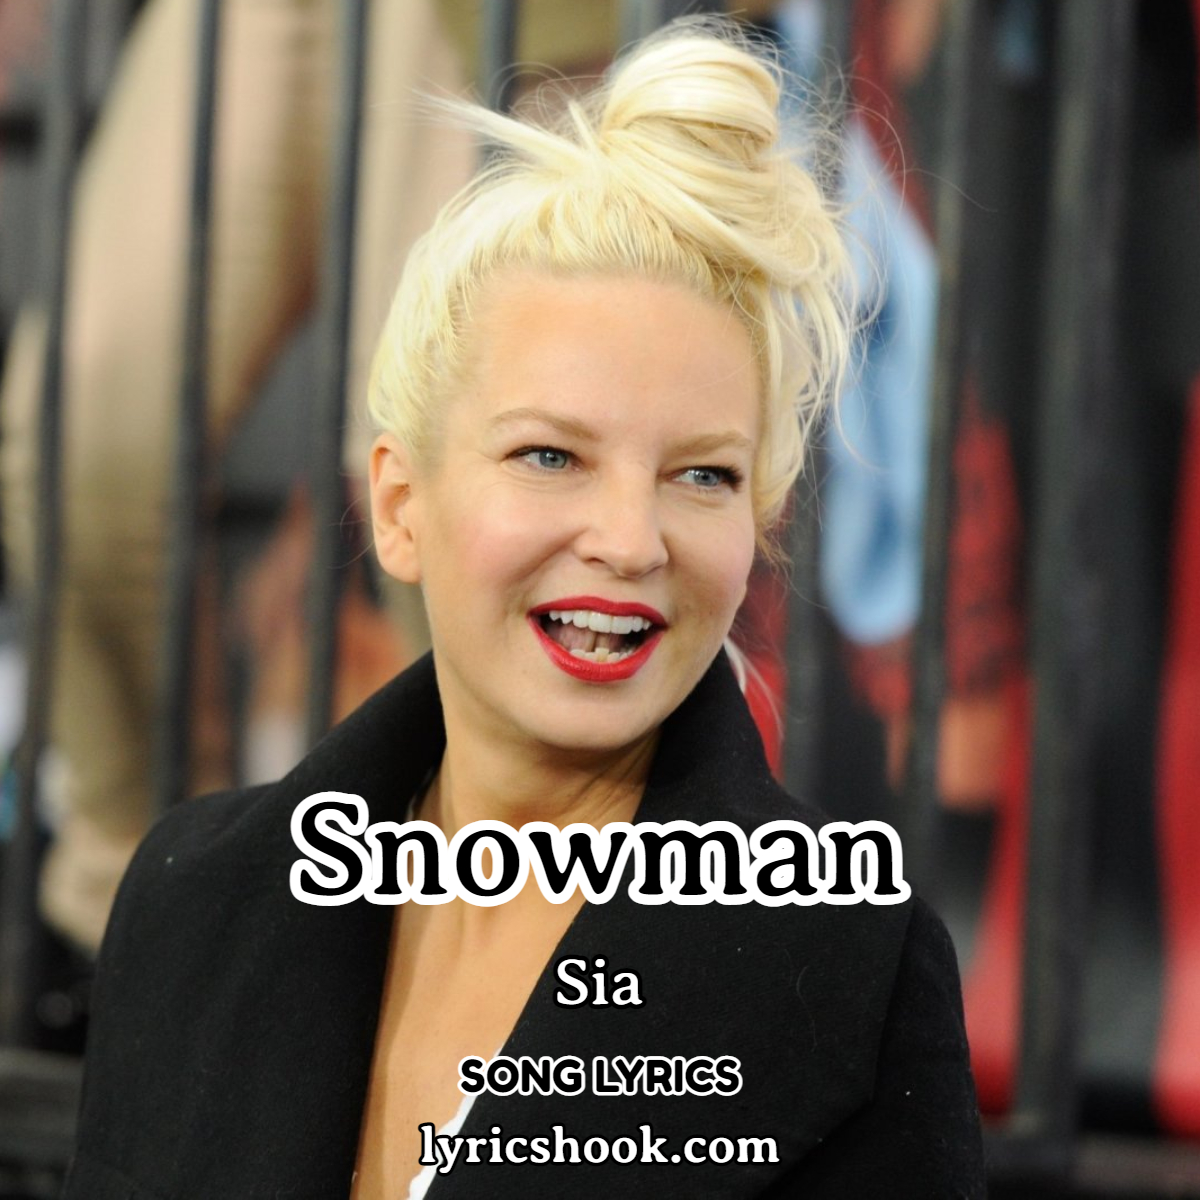 Snowman lyrics Song By Sia